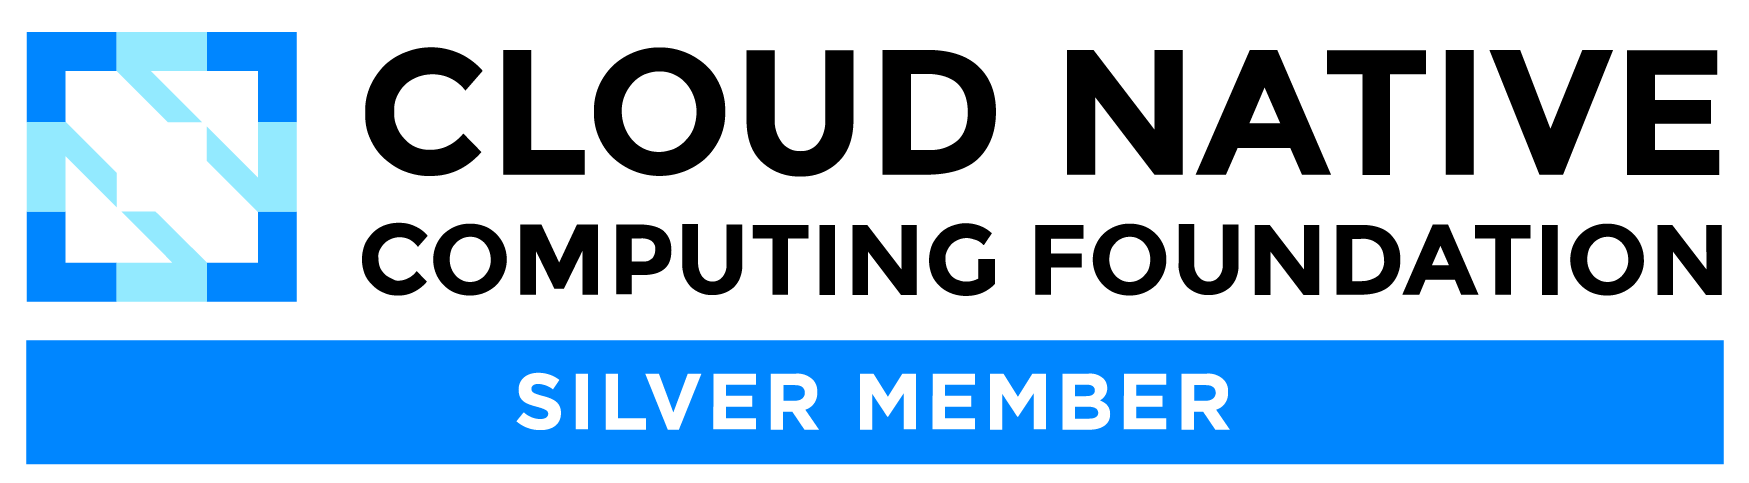 Cloud Native Computing Foundation Silver Member Logo